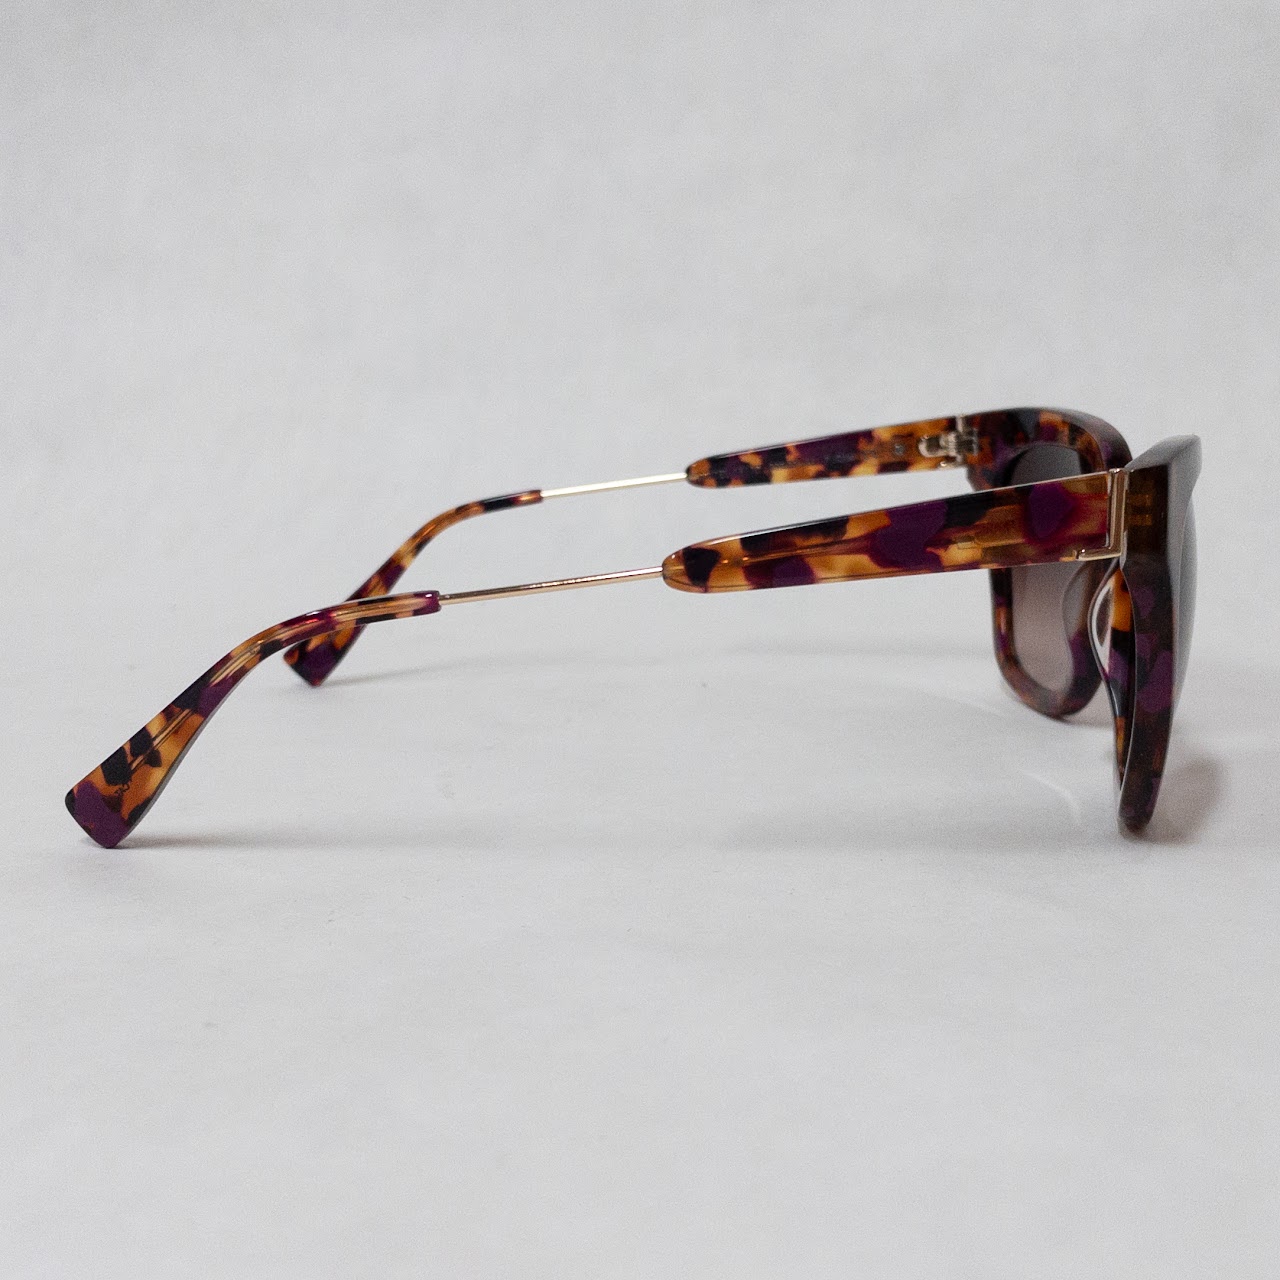 Derek Lam Astor Sunglasses